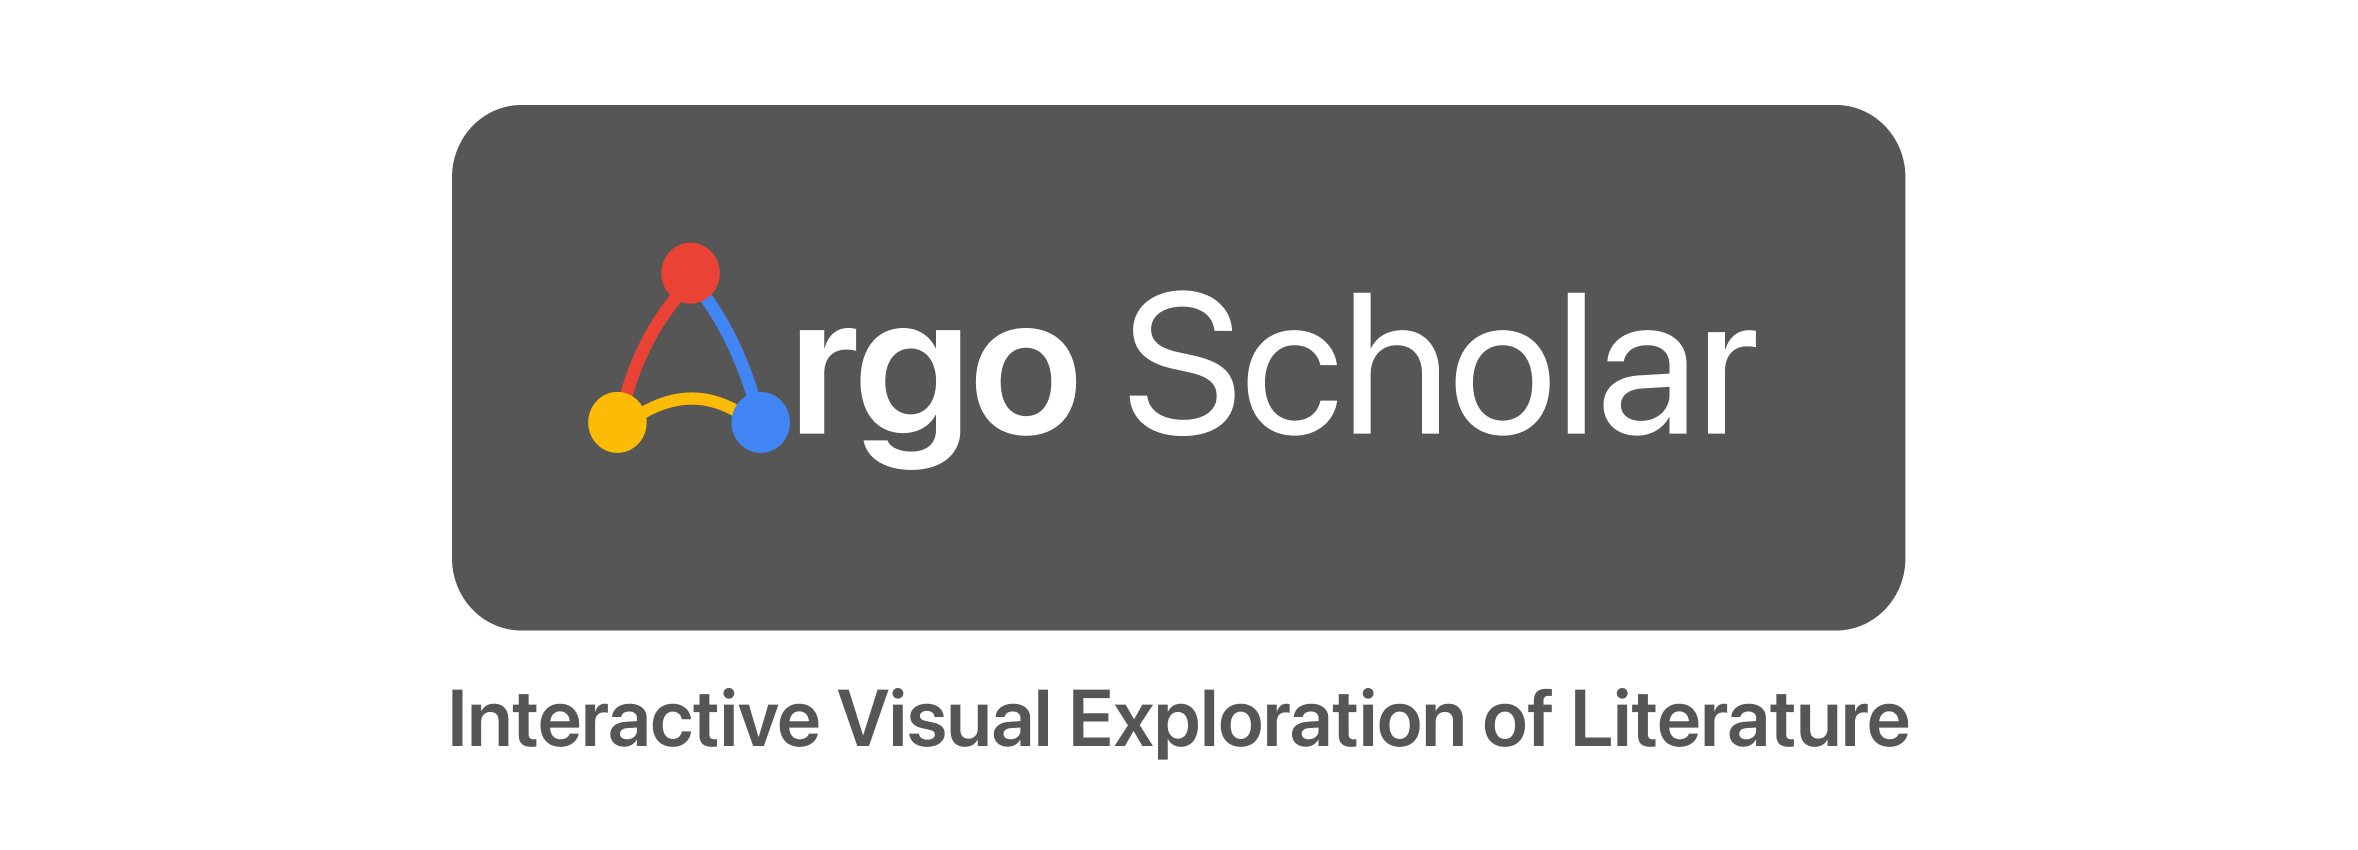 Argo Scholar logo